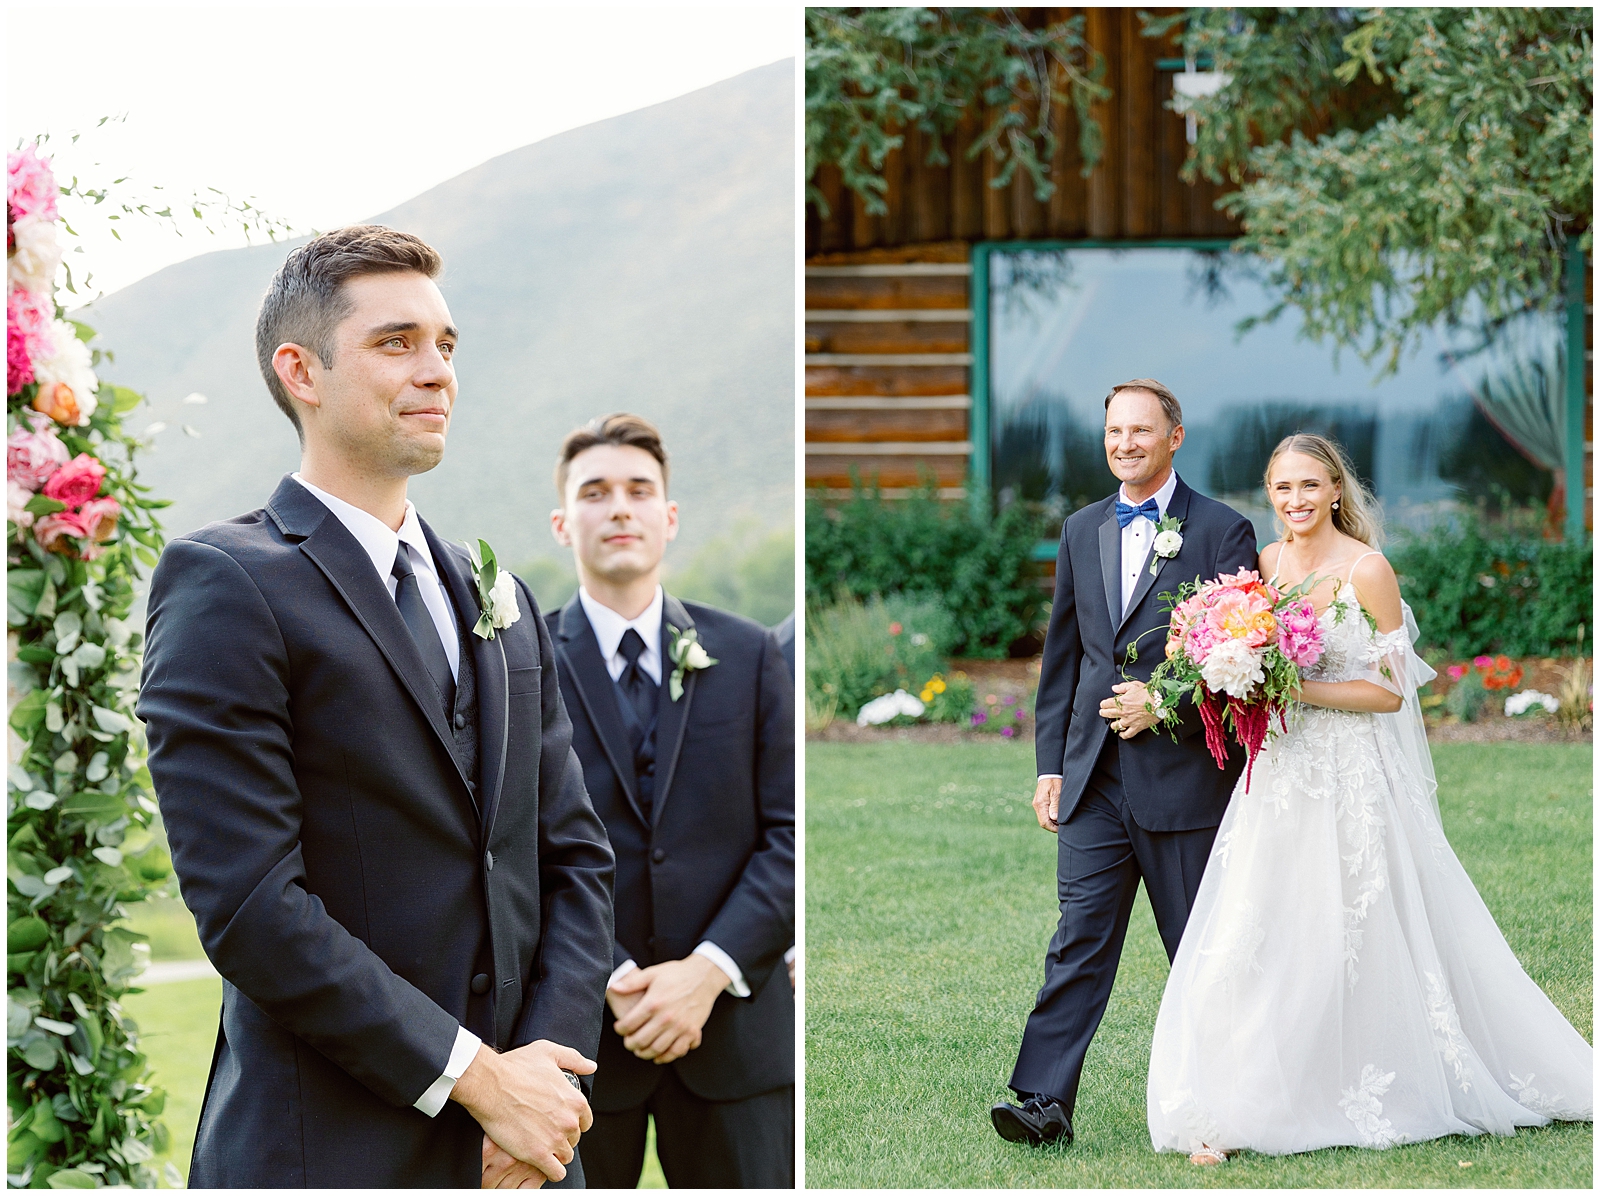 Trail Creek Cabin Wedding at Sun Valley Resort Emotional Ceremony